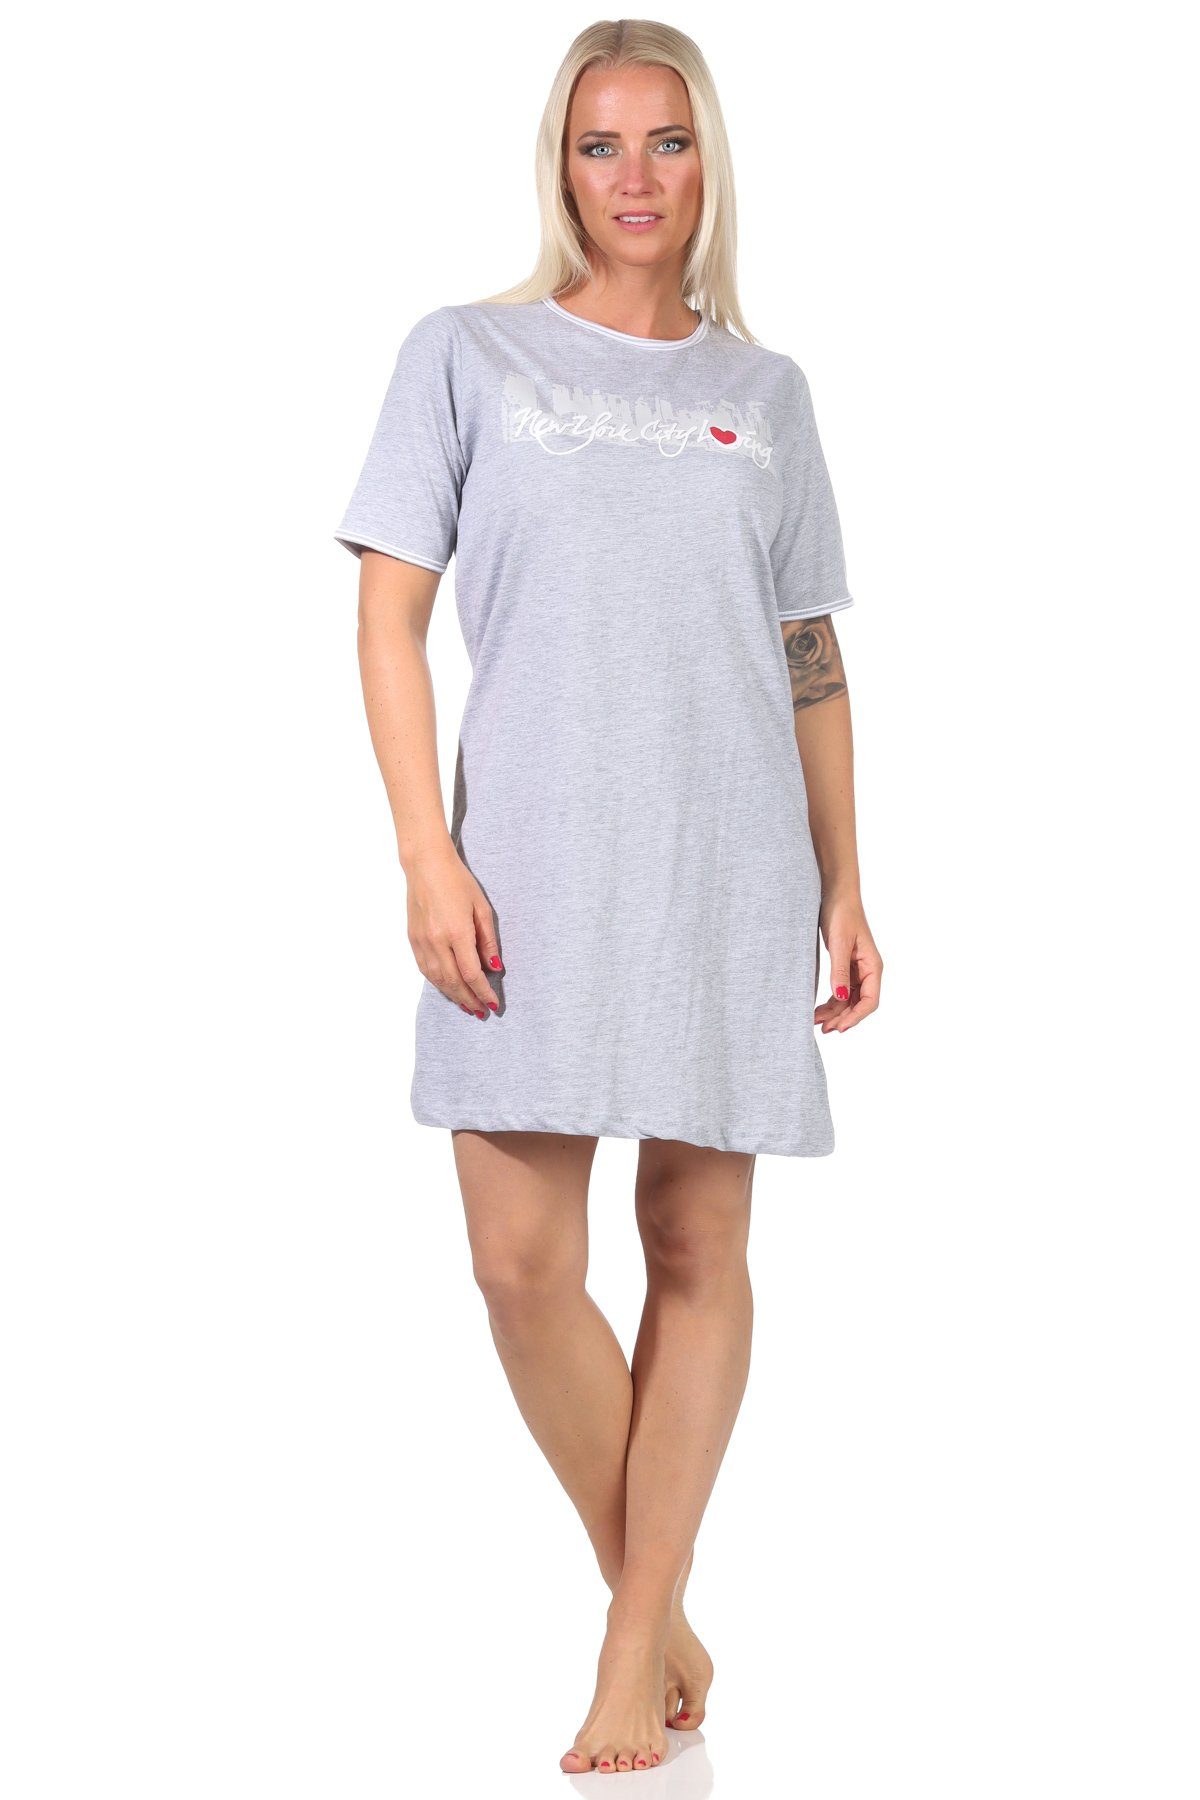 Normann Nachthemd Damen Nachthemd kurzarm mit Front-Print "New York City Loving" grau-melange